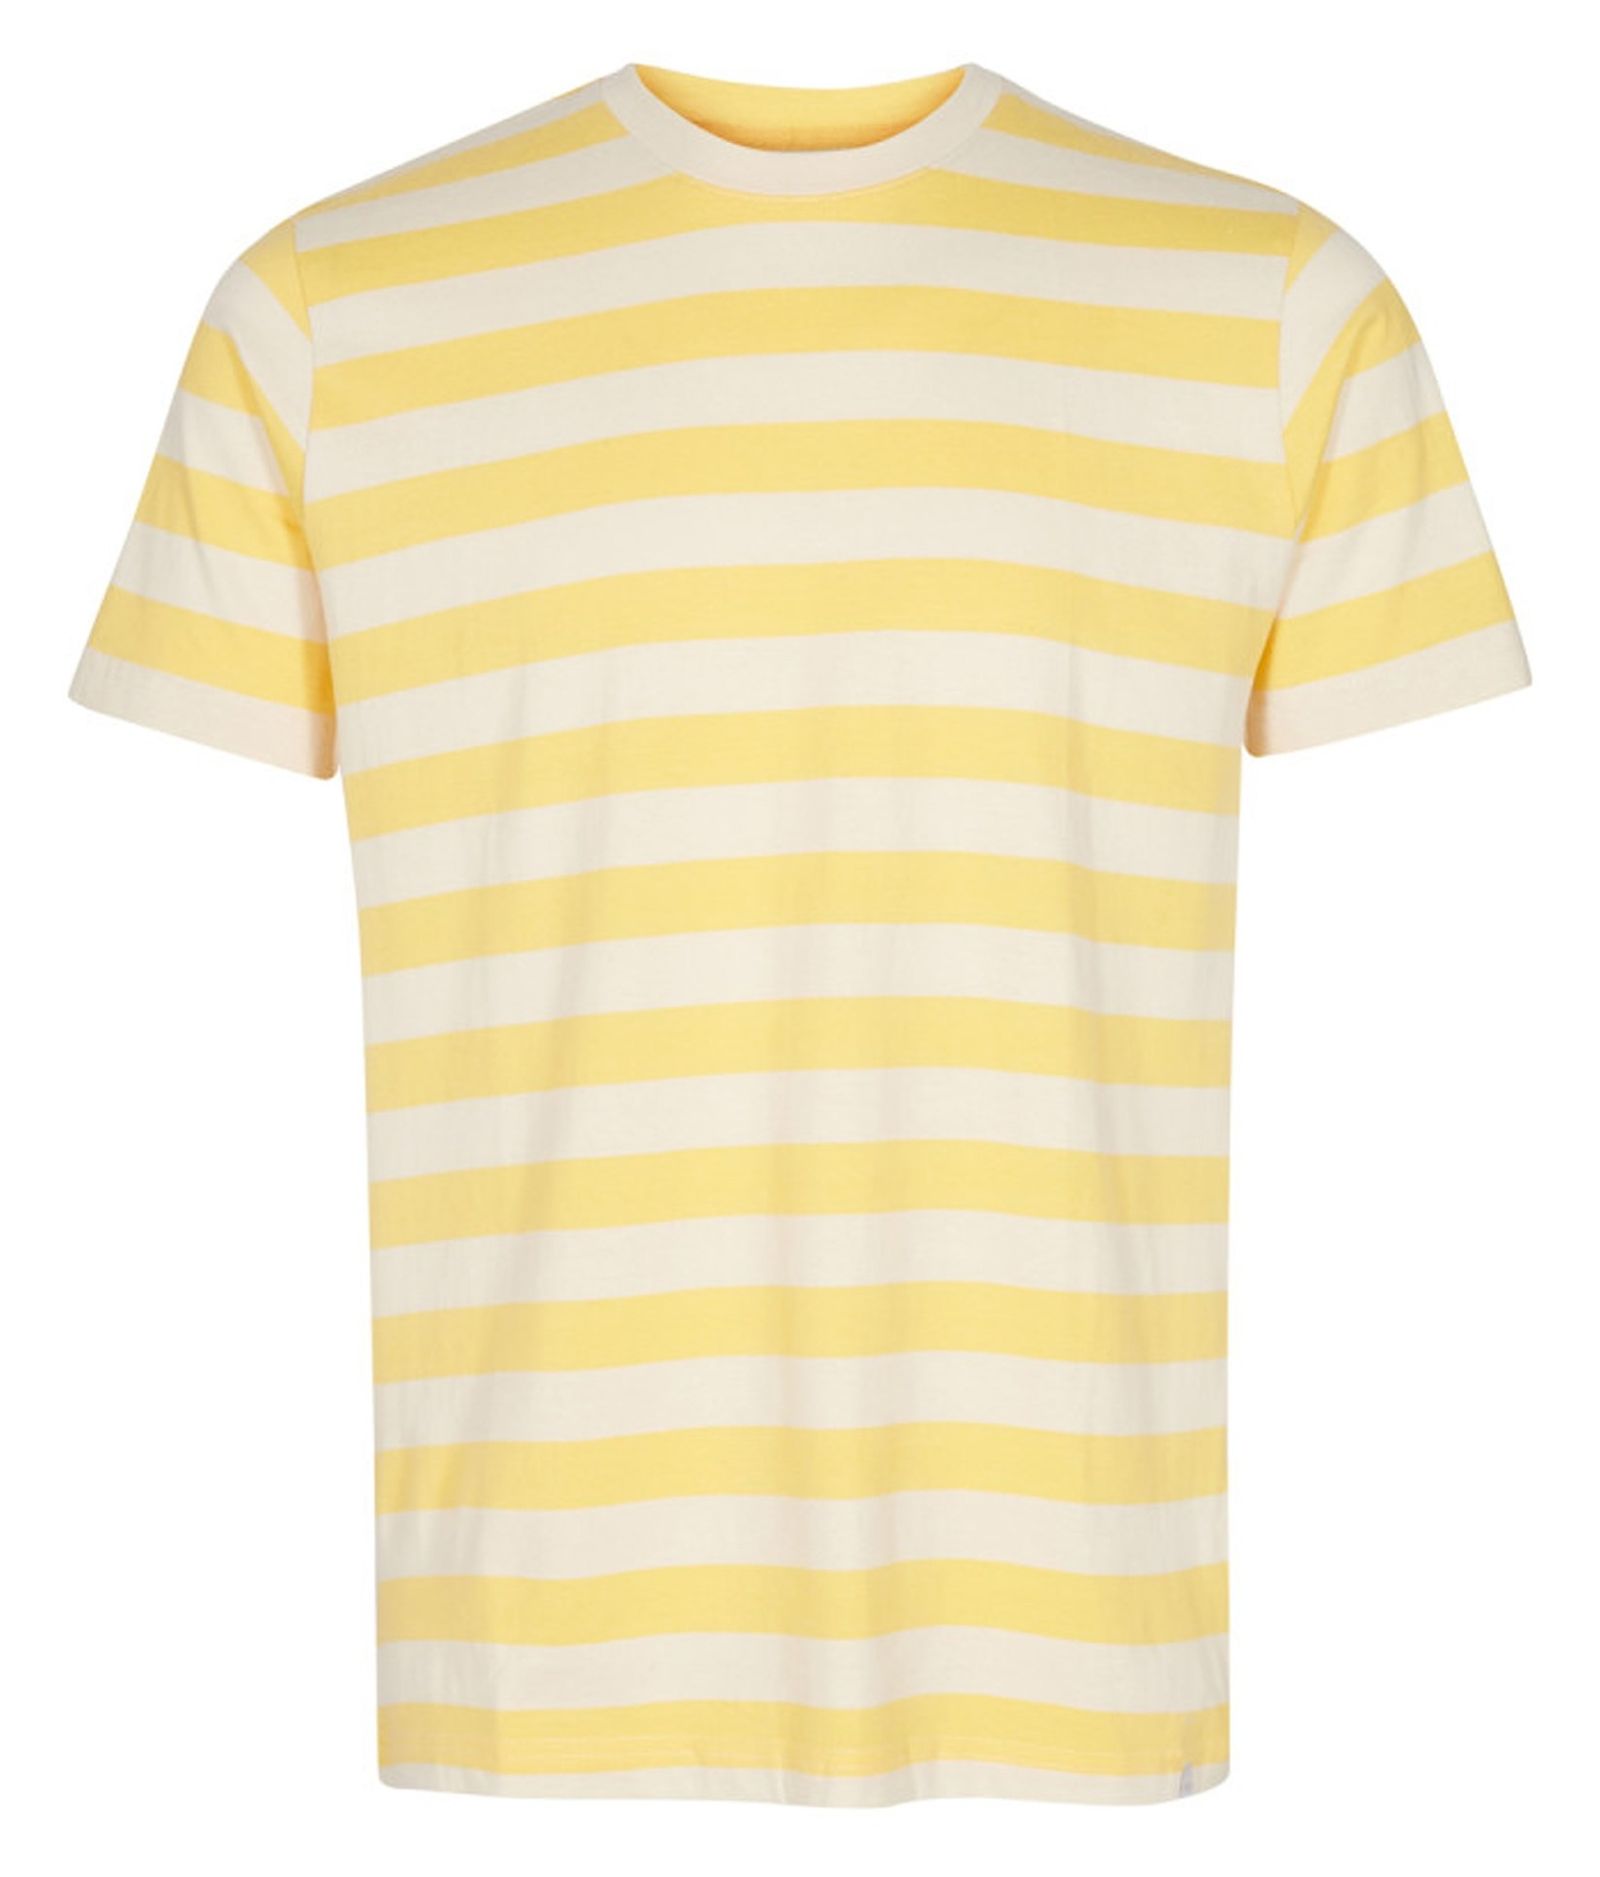 تی شرت نخی مردانه Thiago - مینیموم - زرد - 1